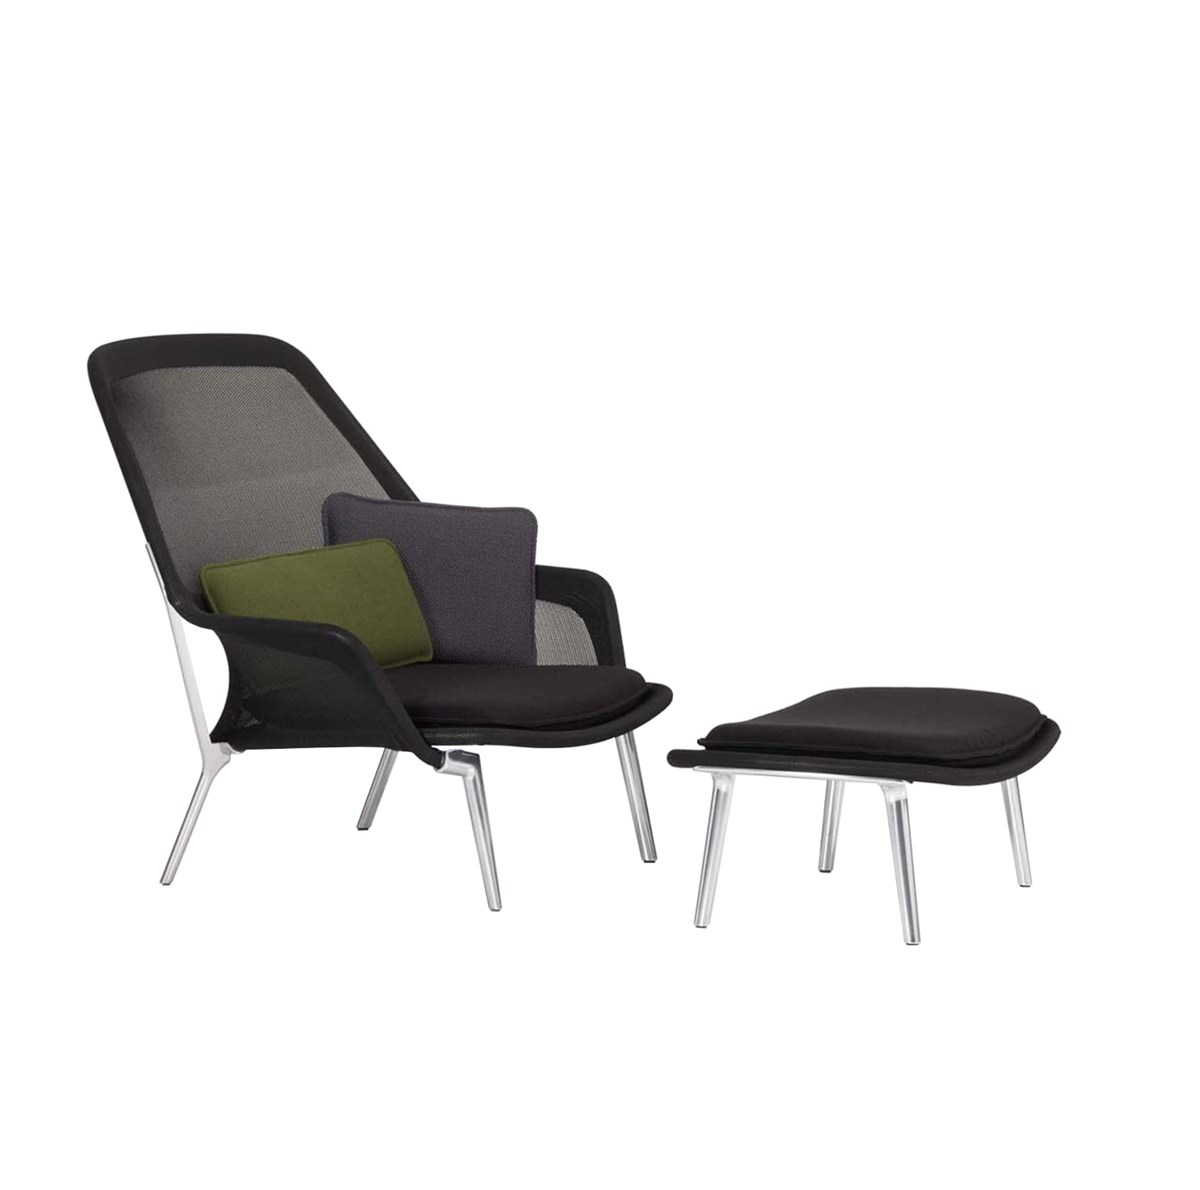 Vitra-Ronan-Erwan-Bouroullec-Slow-Chair-Ottoman-Matisse-1